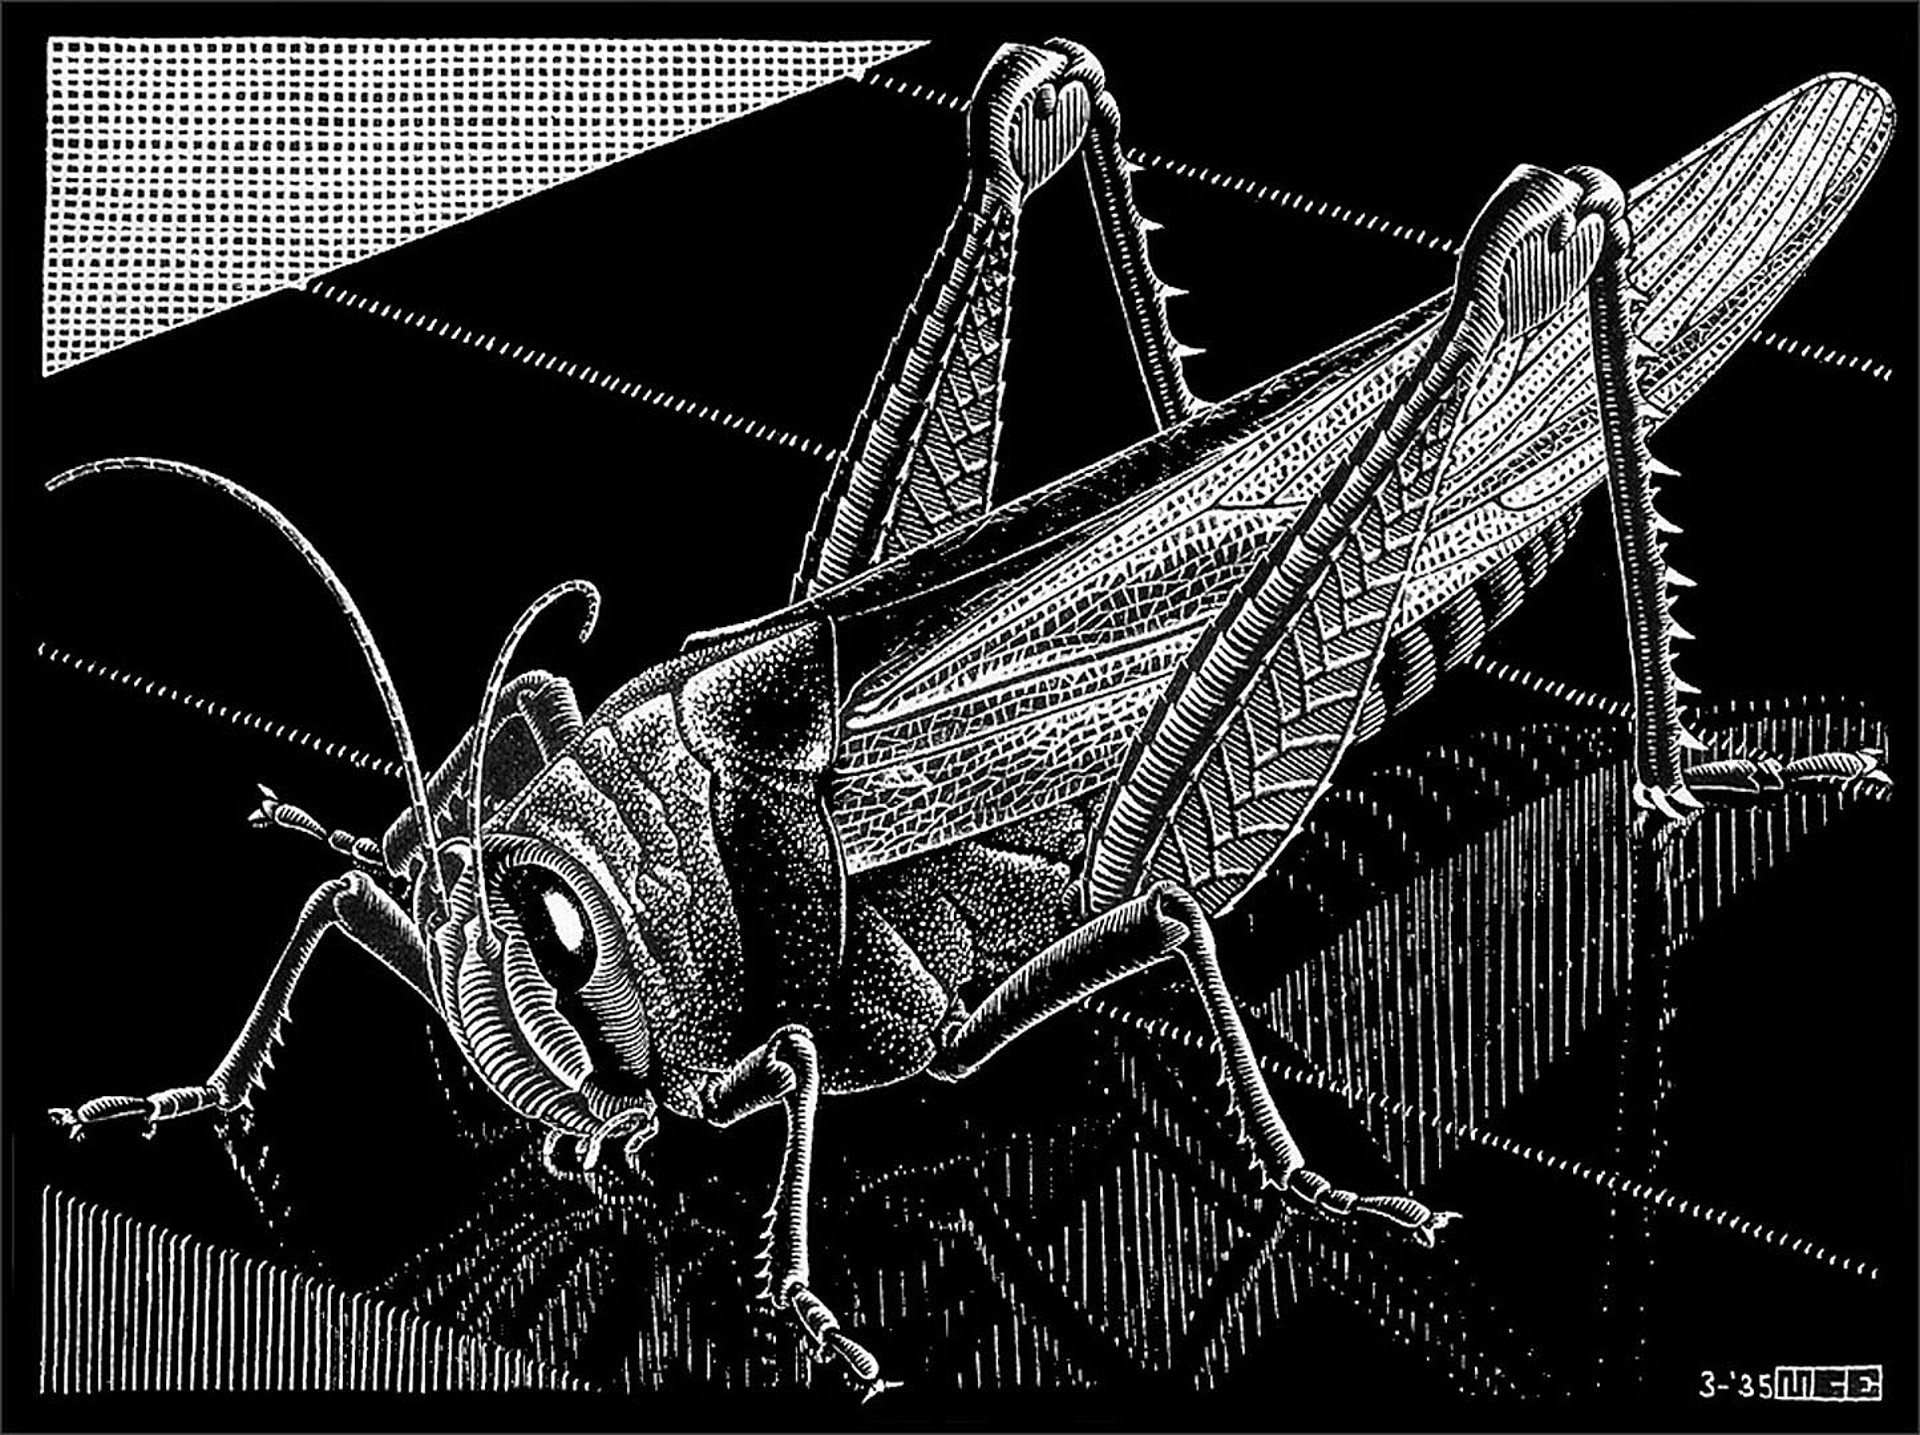 Grasshopper by M.C. Escher